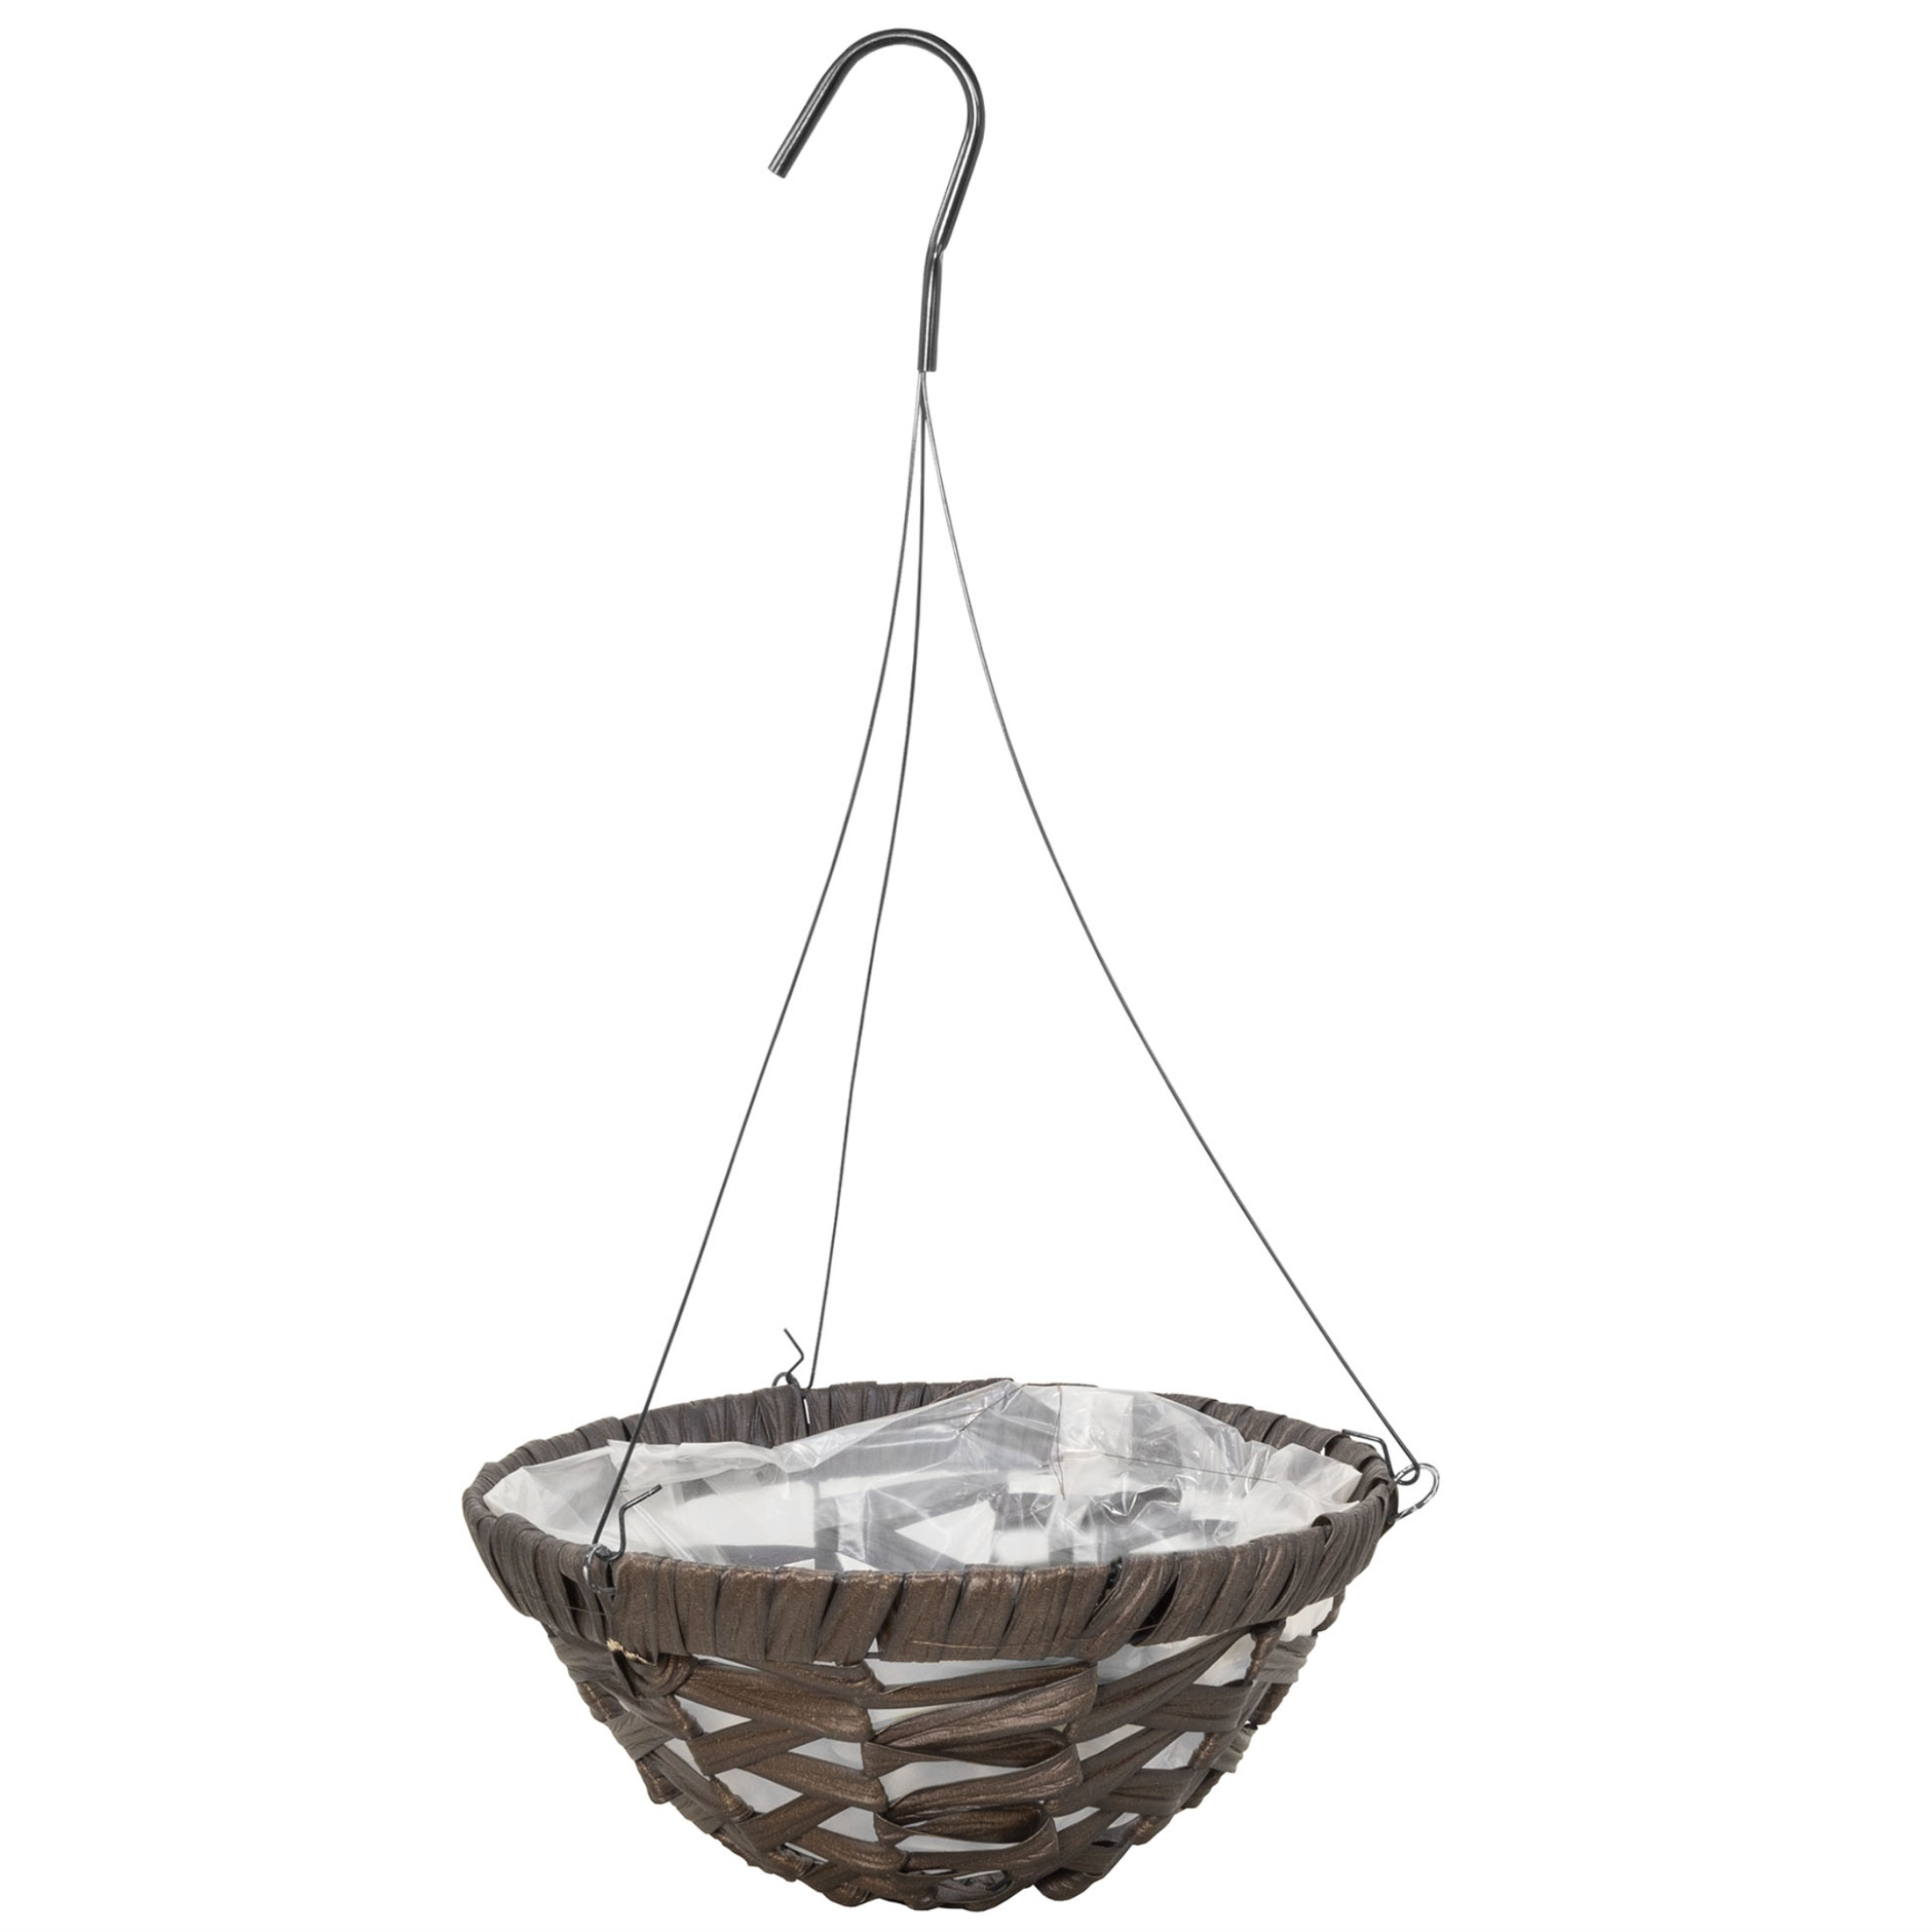 Gardener Select Woven Plastic Wicker Hanging Basket, Coffee Wicker